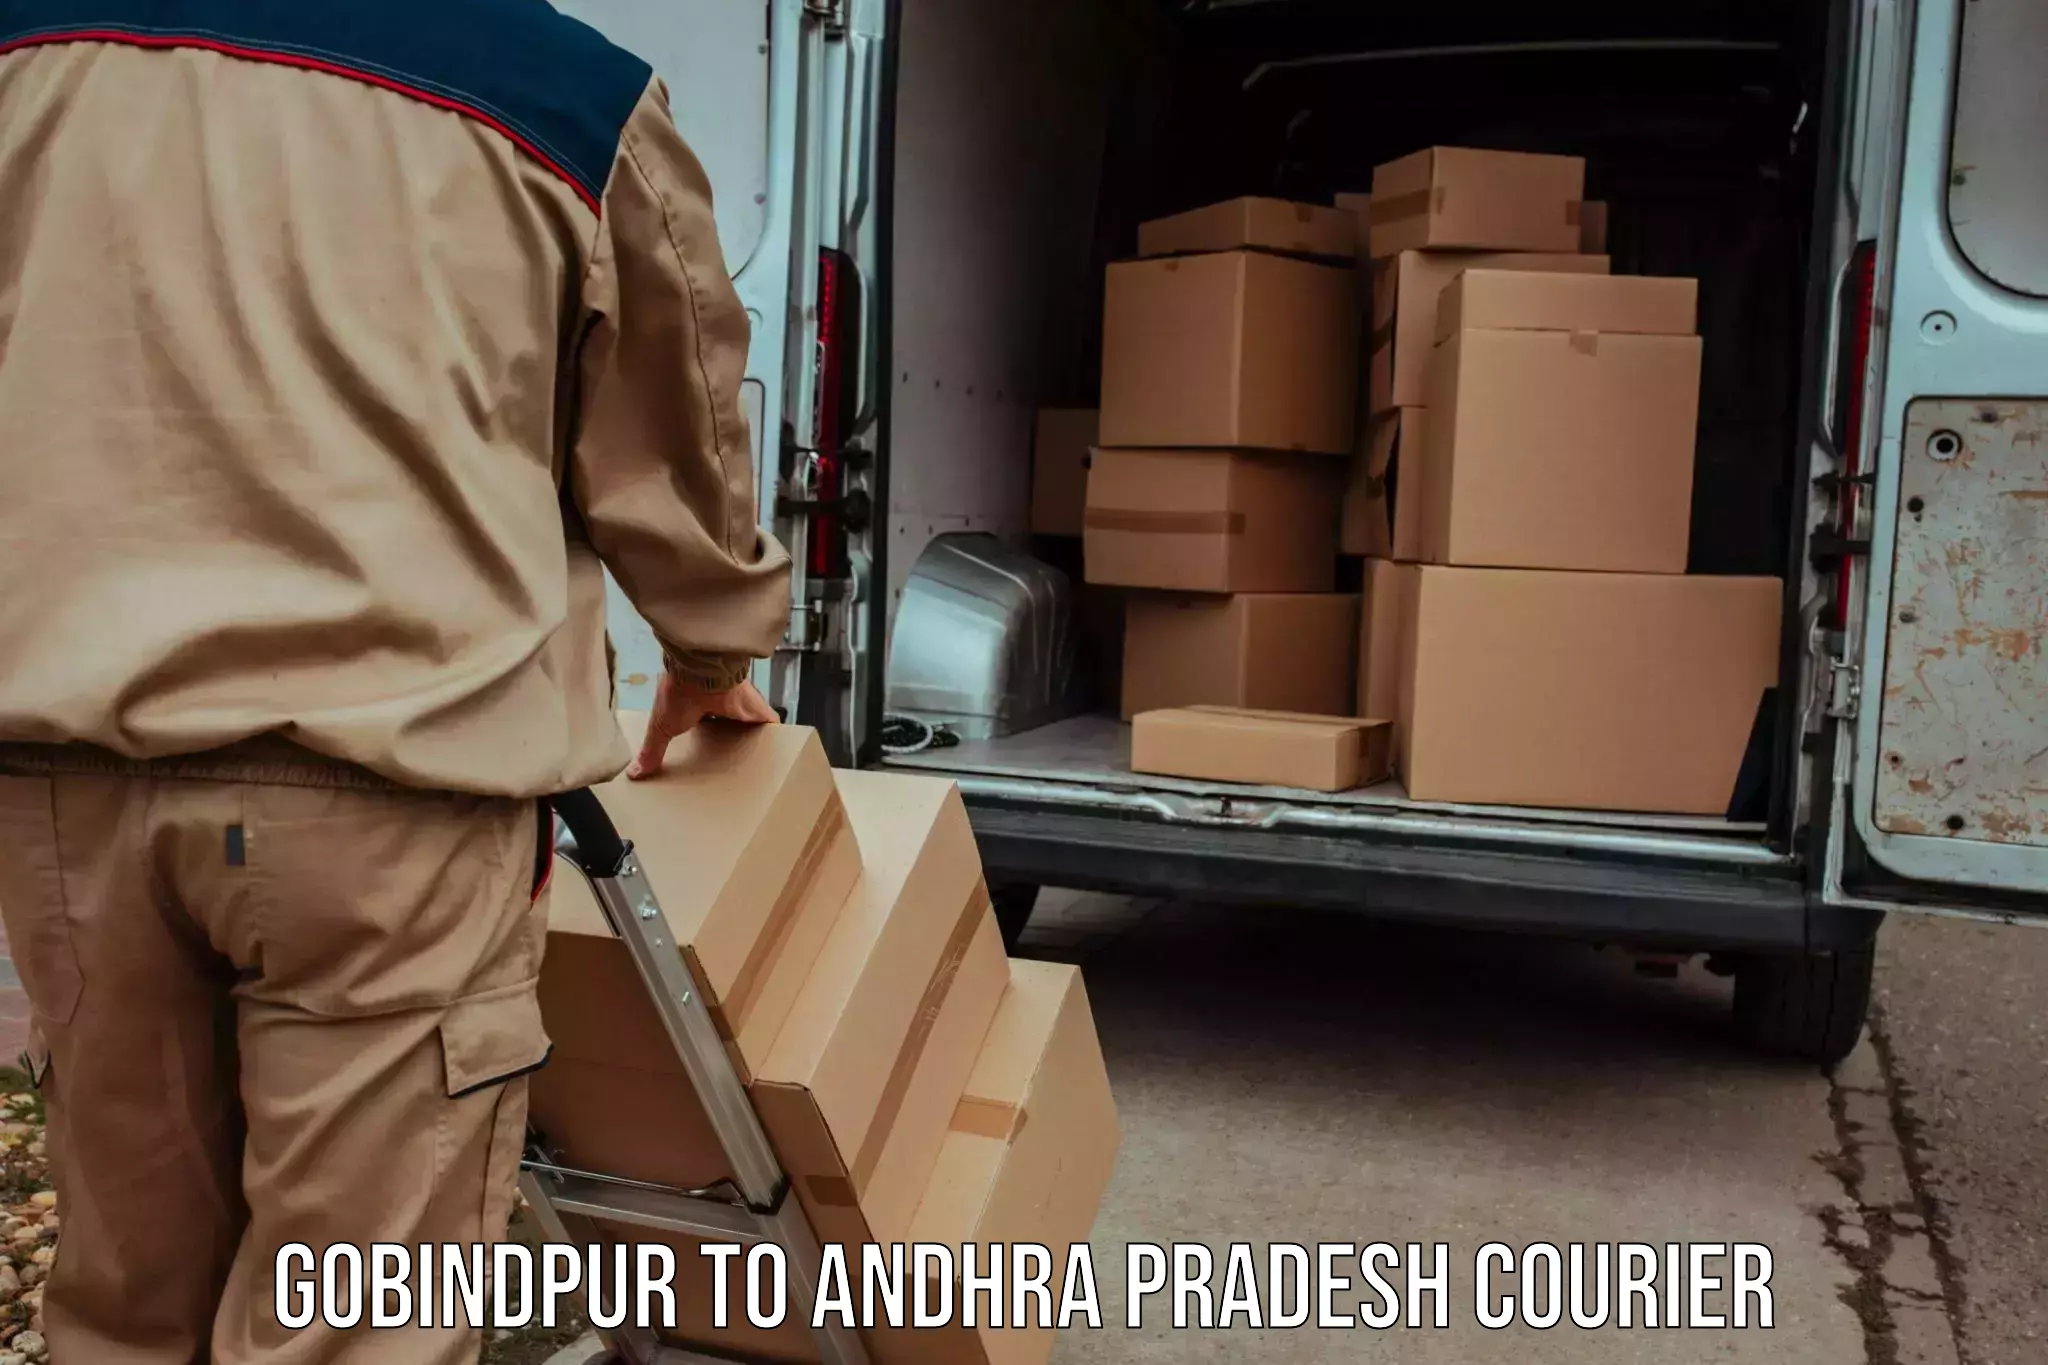 Express delivery network Gobindpur to Venkatagiri